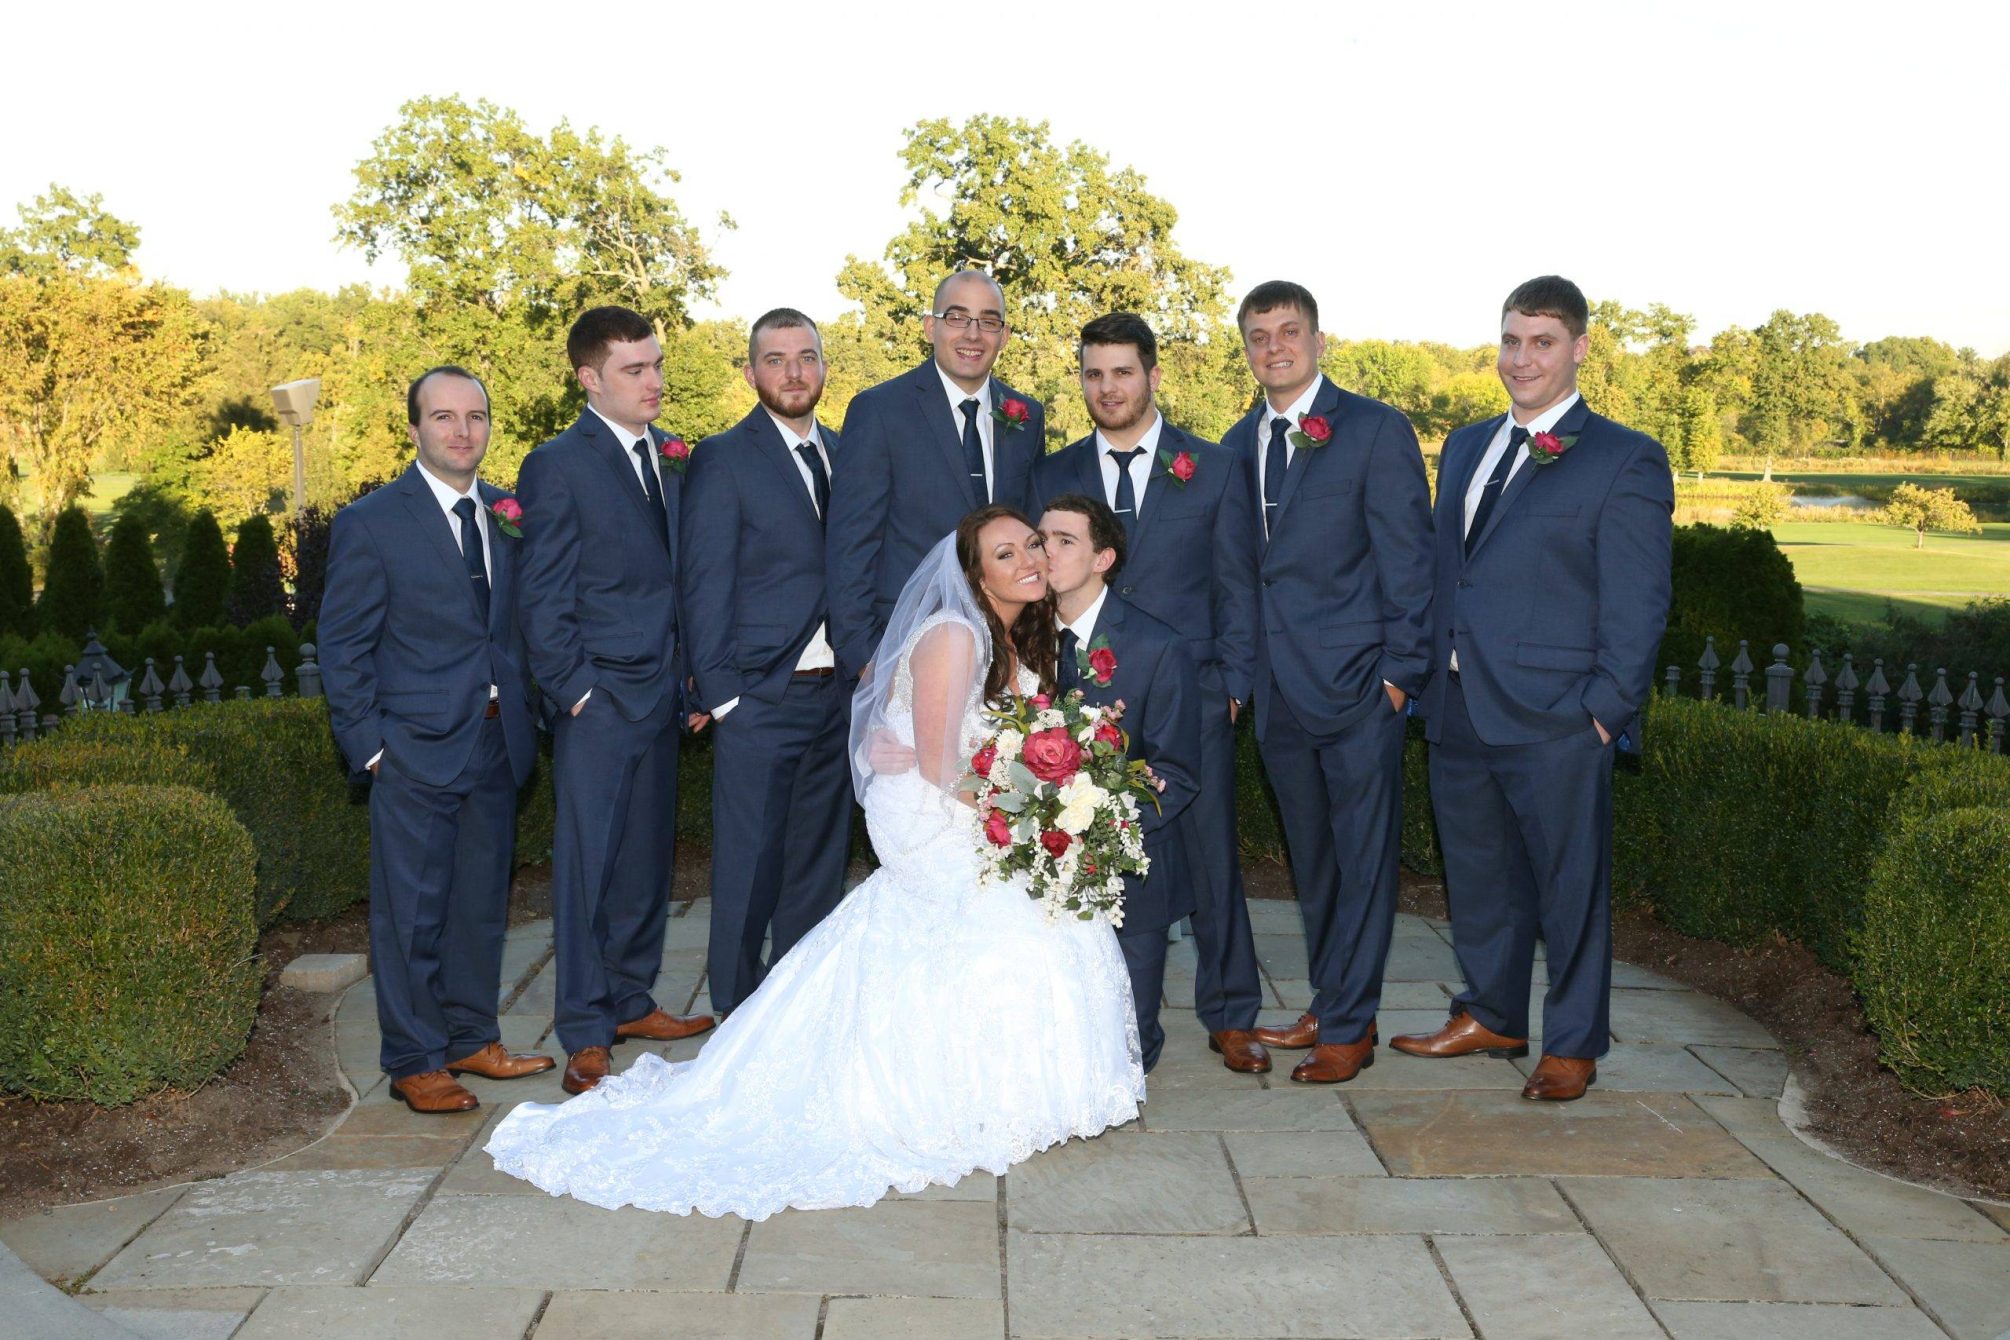 Park Savoy groomsmen with bride and groom